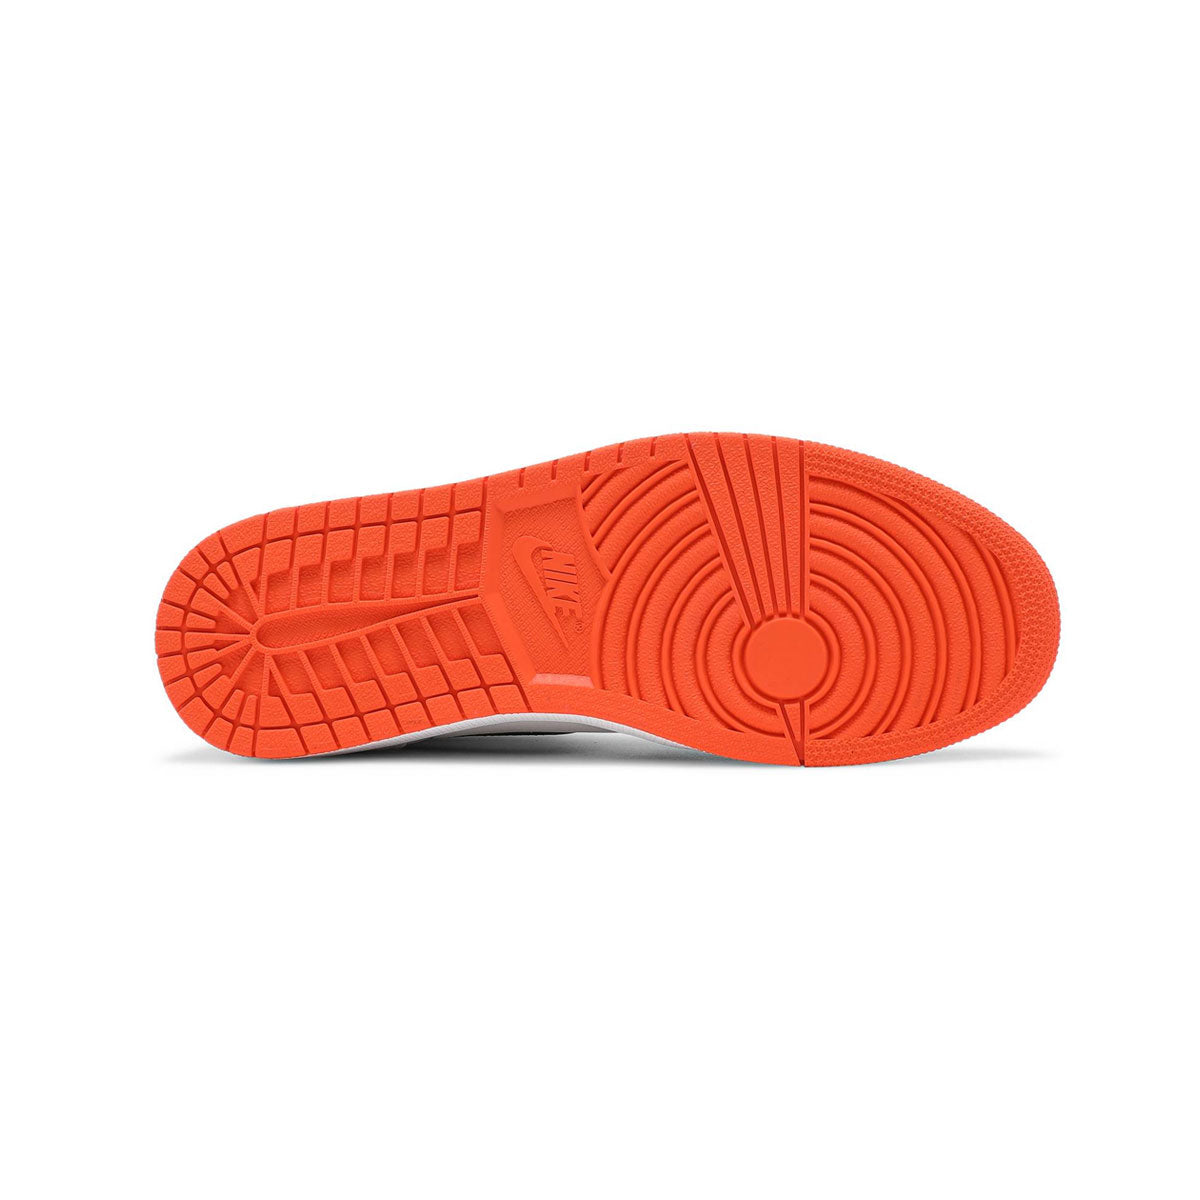 Air Jordan 1 High OG “Electro Orange”